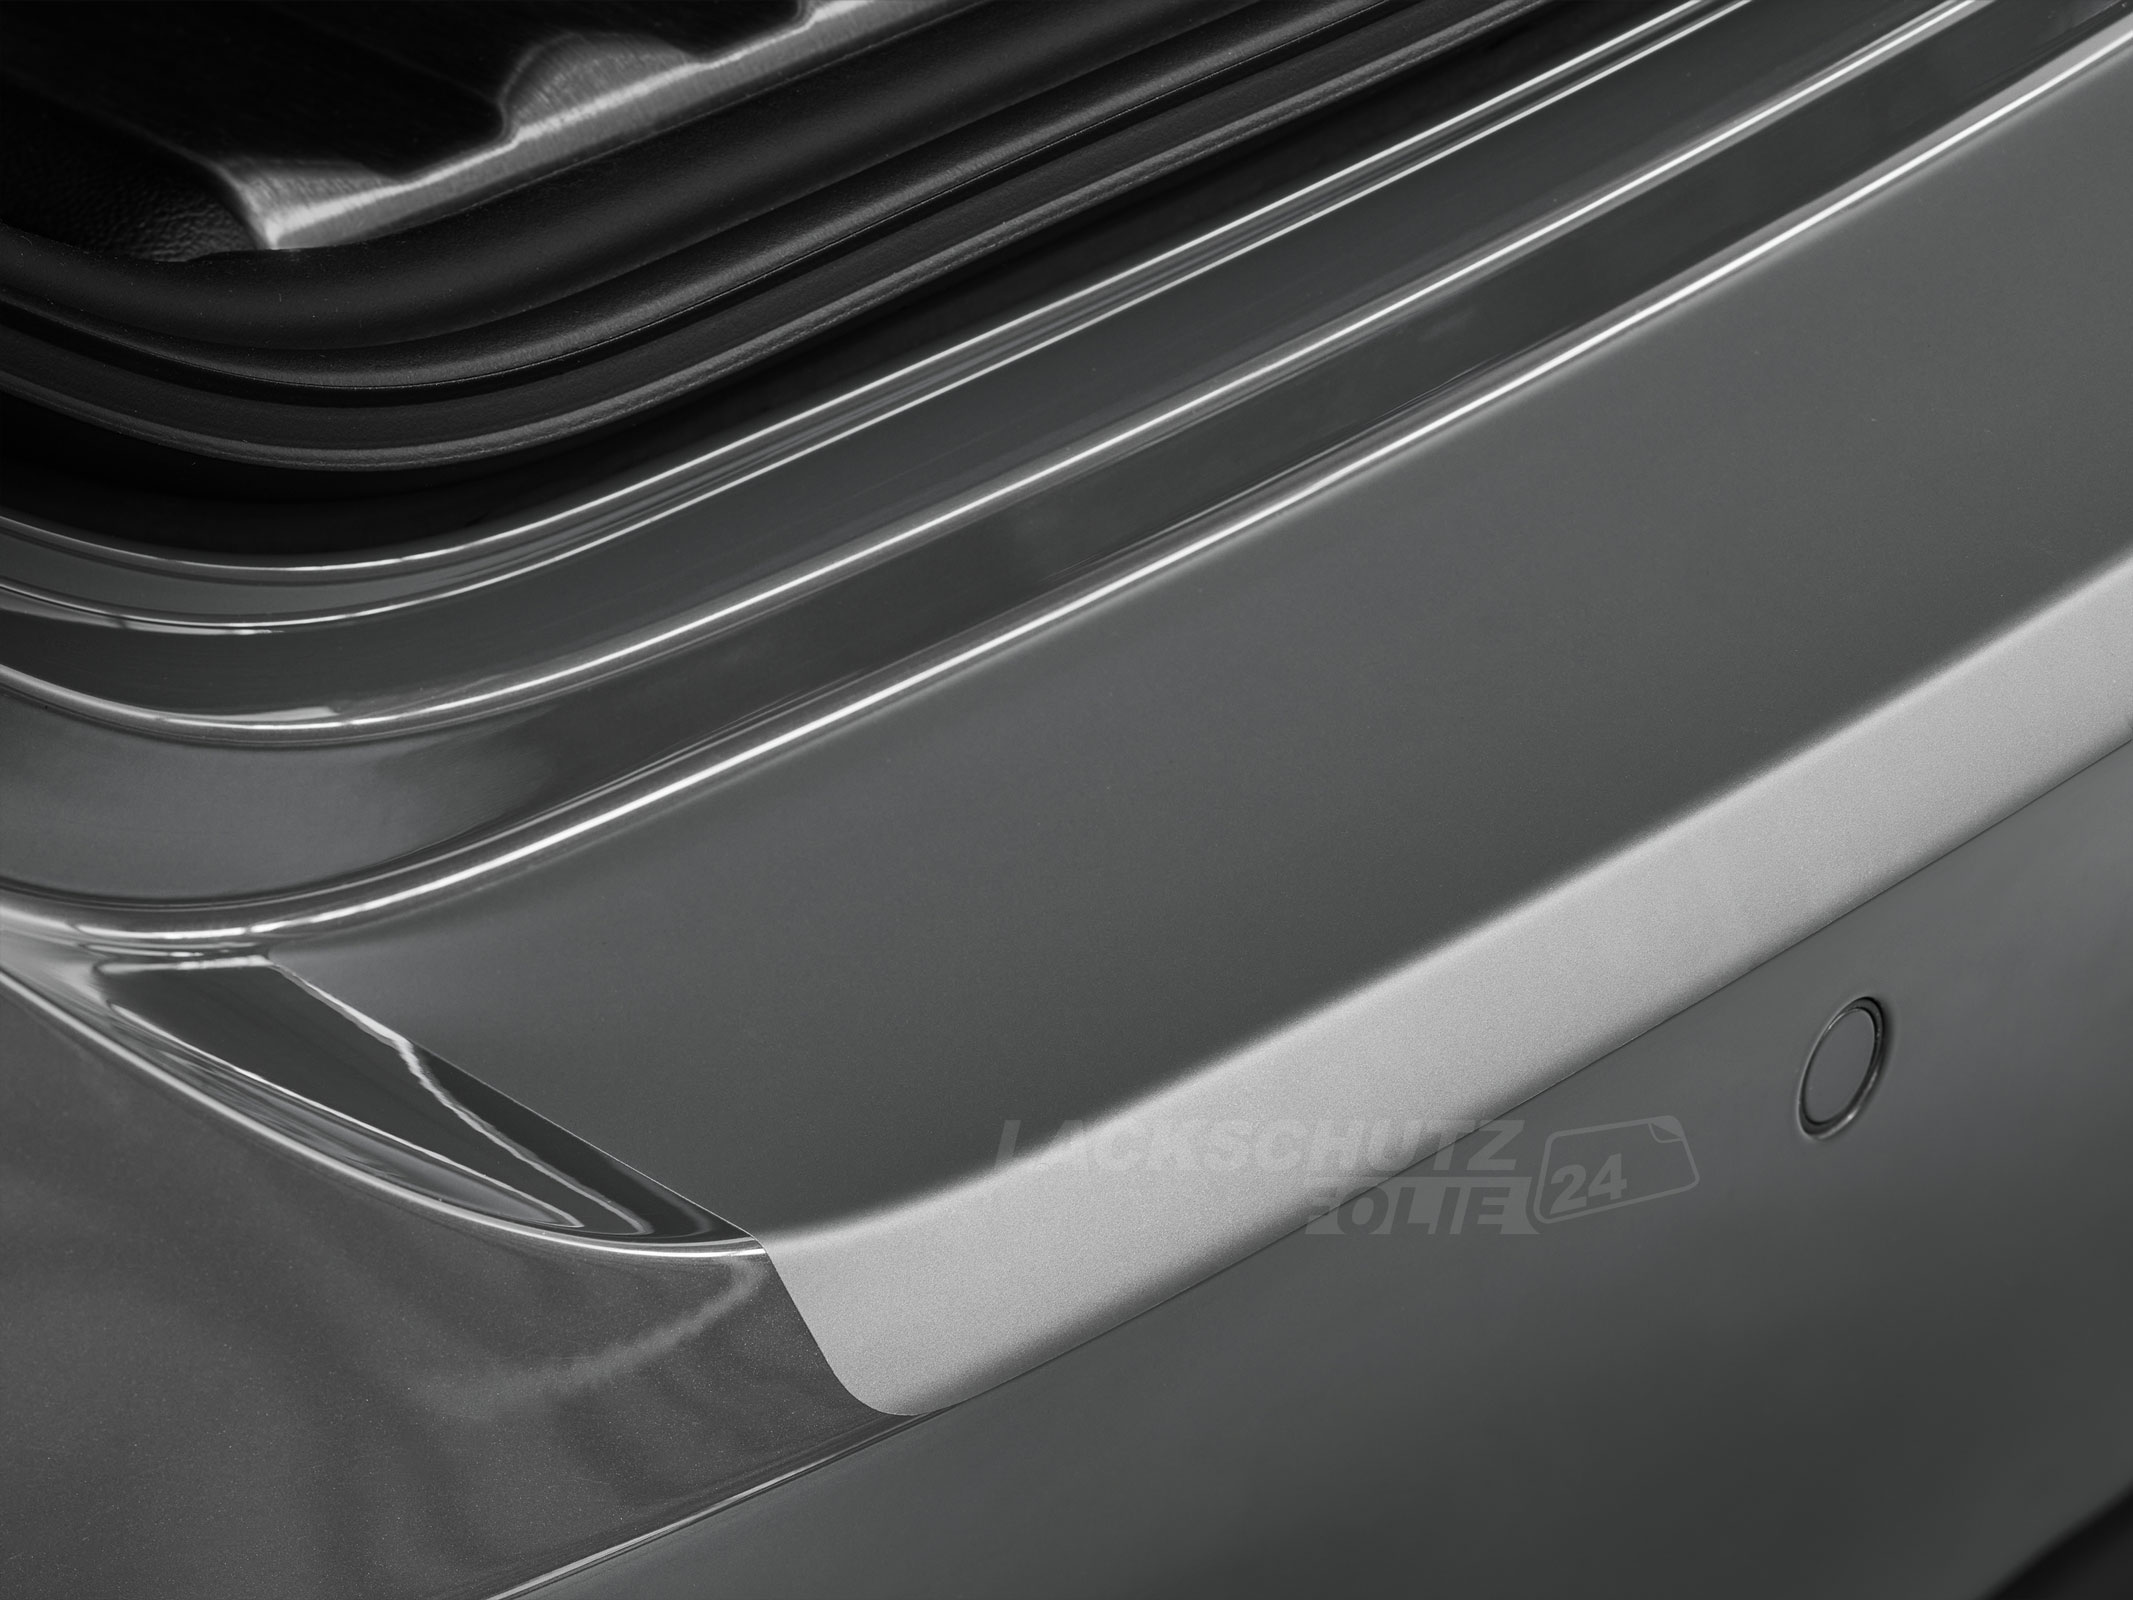 Ladekantenschutzfolie - Transparent Glatt MATT 110 µm stark  für BMW X4 Typ F26, BJ 2014-03/2018